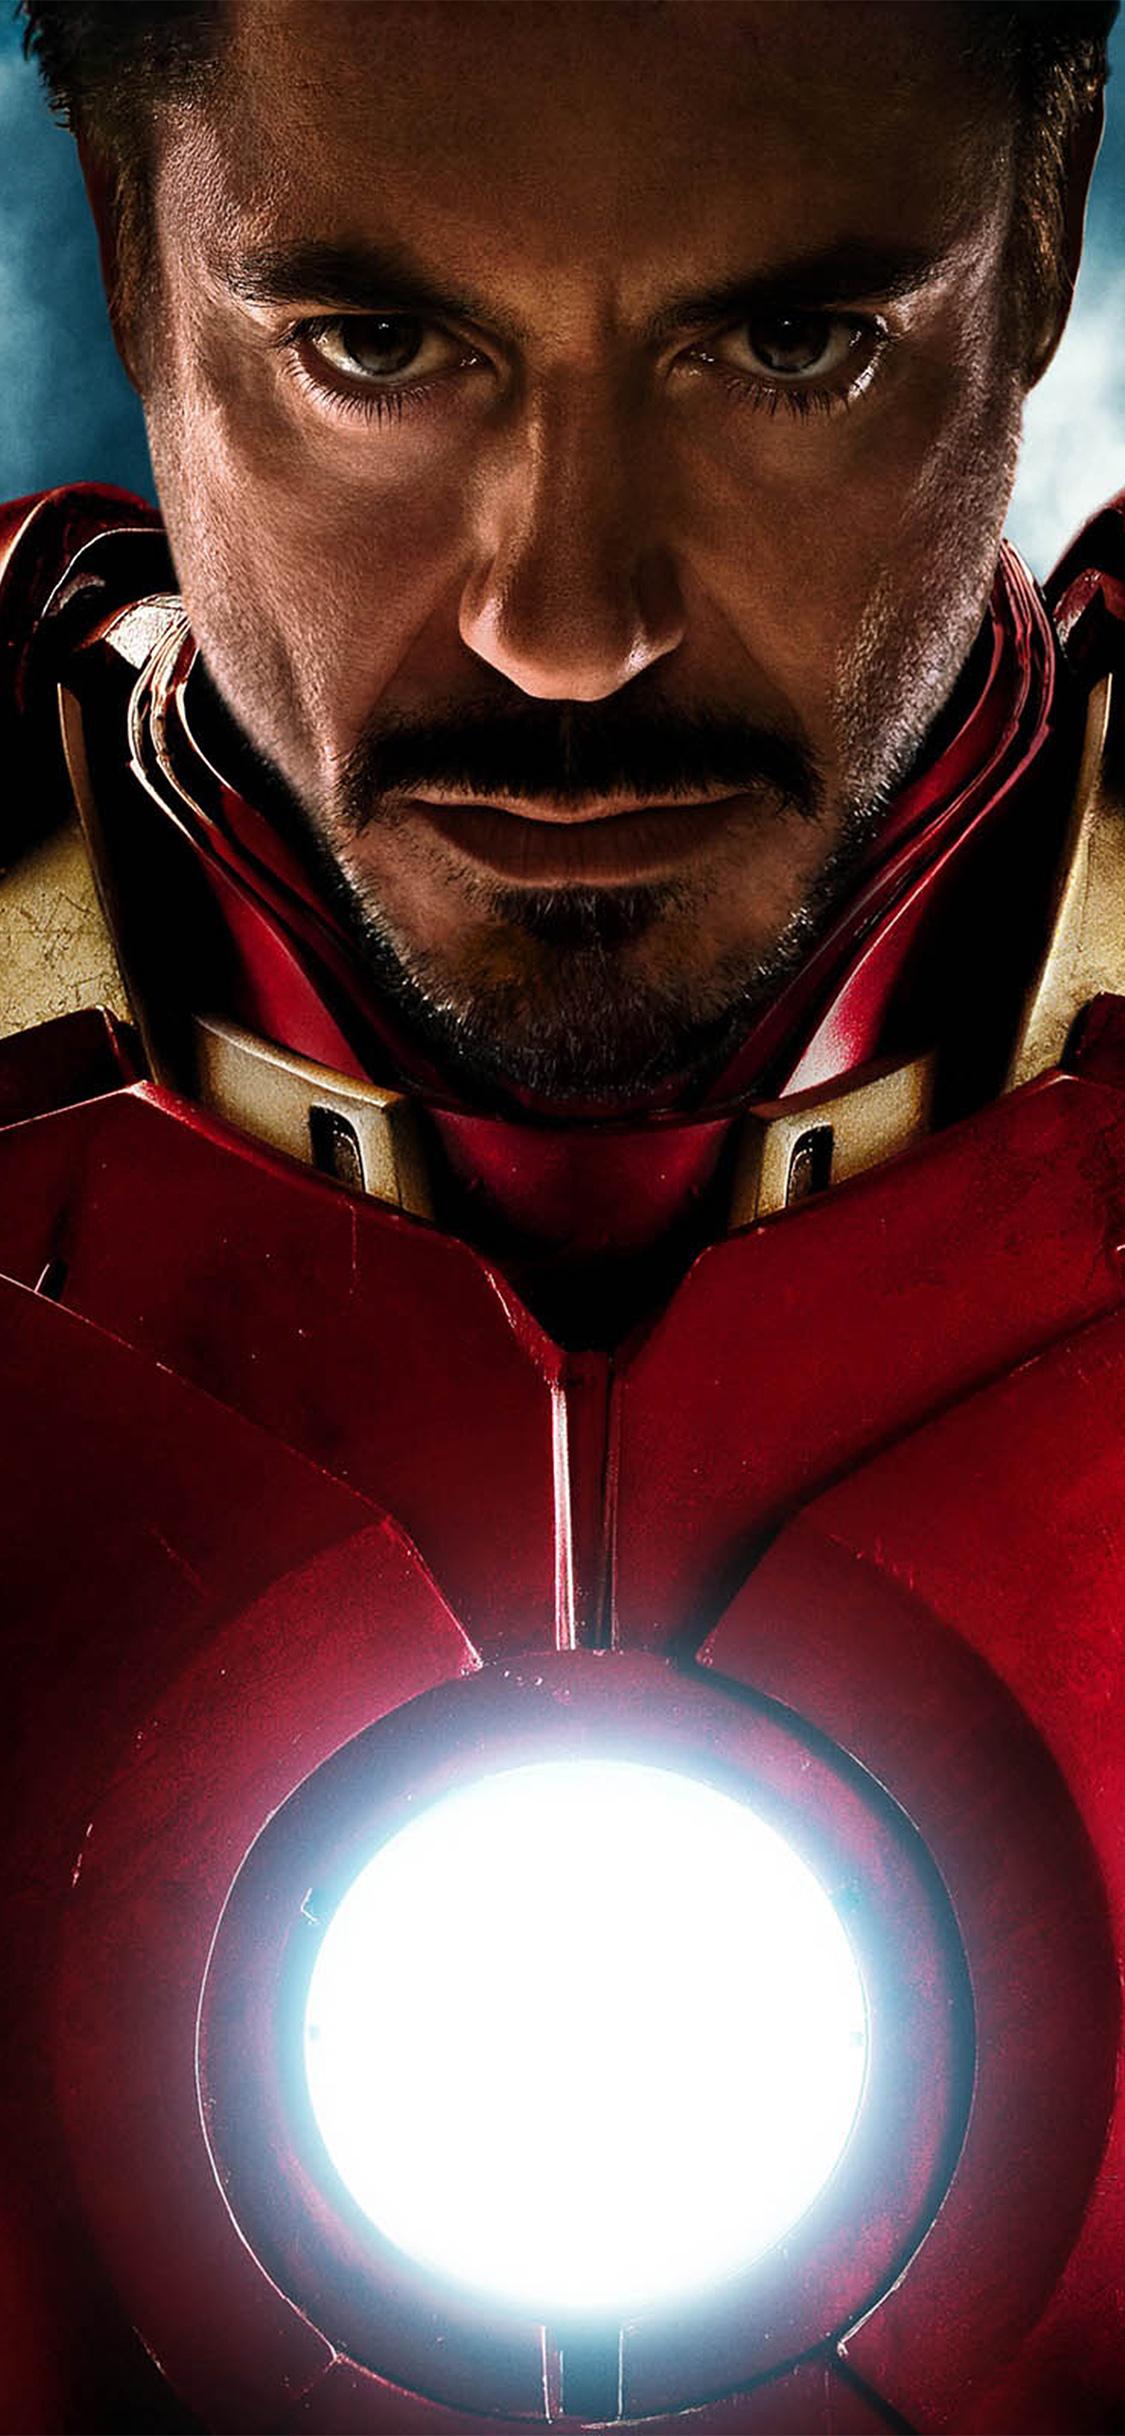 Ironman angry hero superhero red avengers iPhone X Wallpapers Free